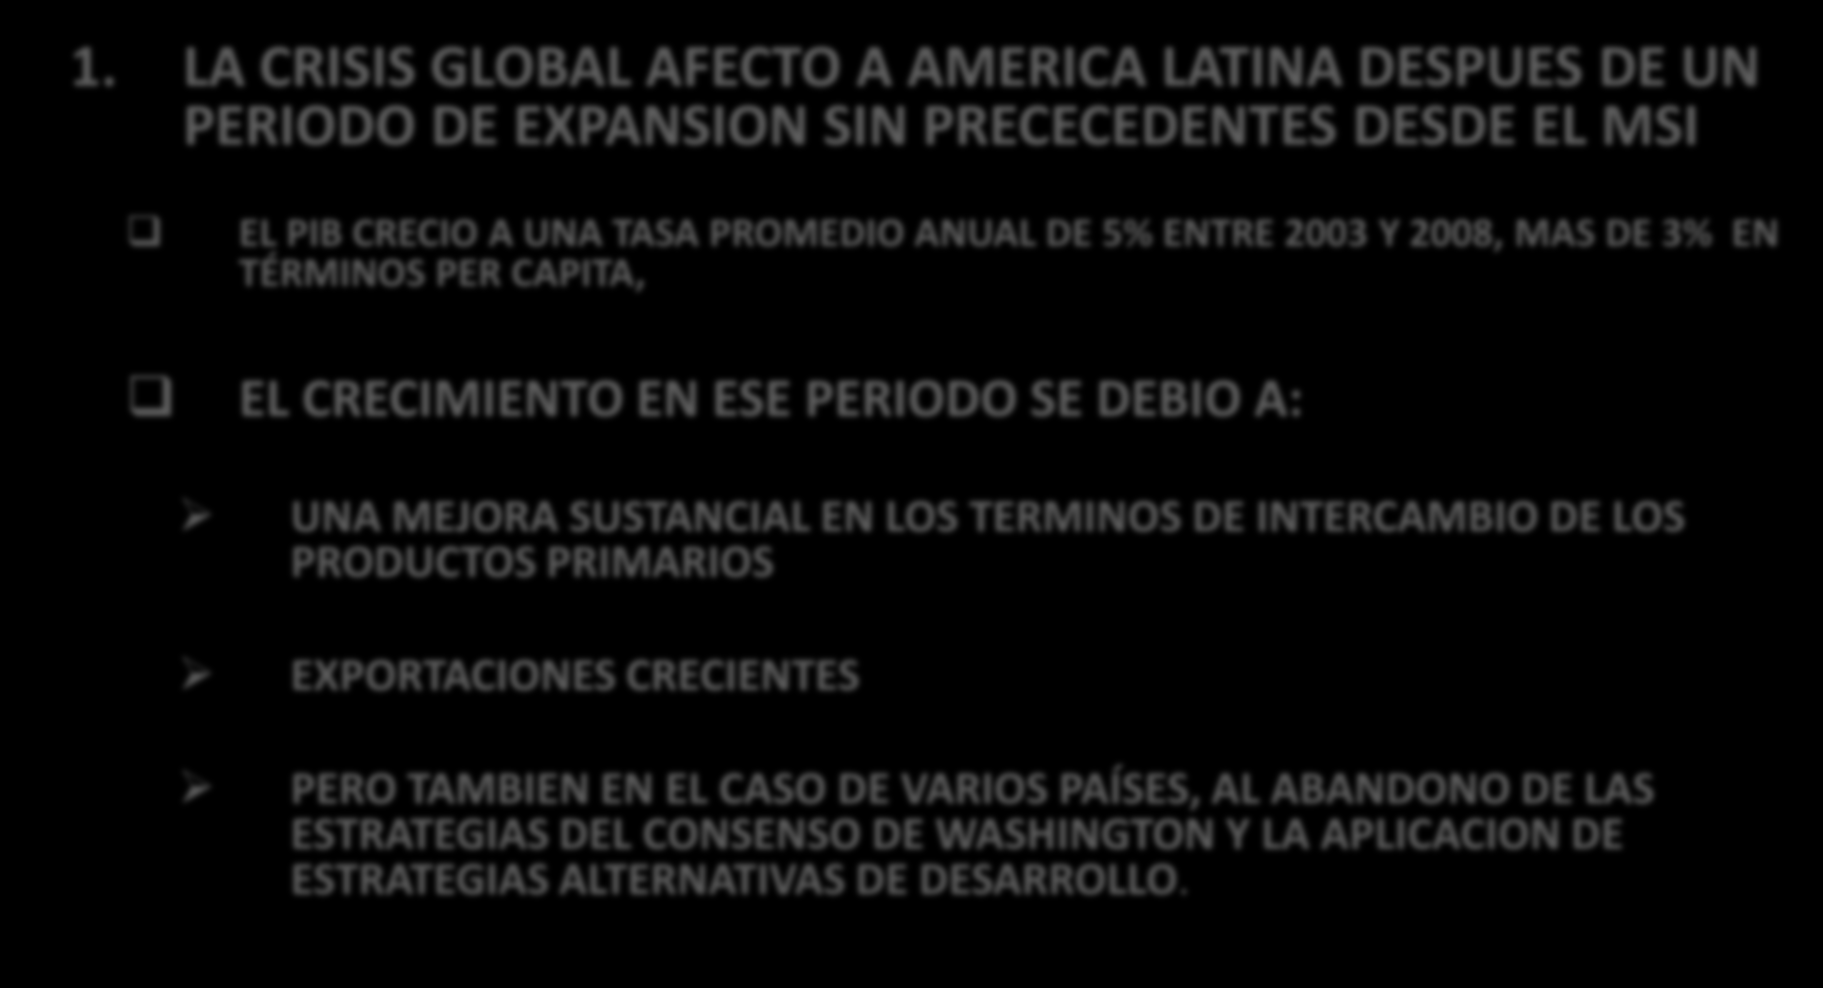 AMERICA LATINA Y LA CRISIS GLOBAL 1.